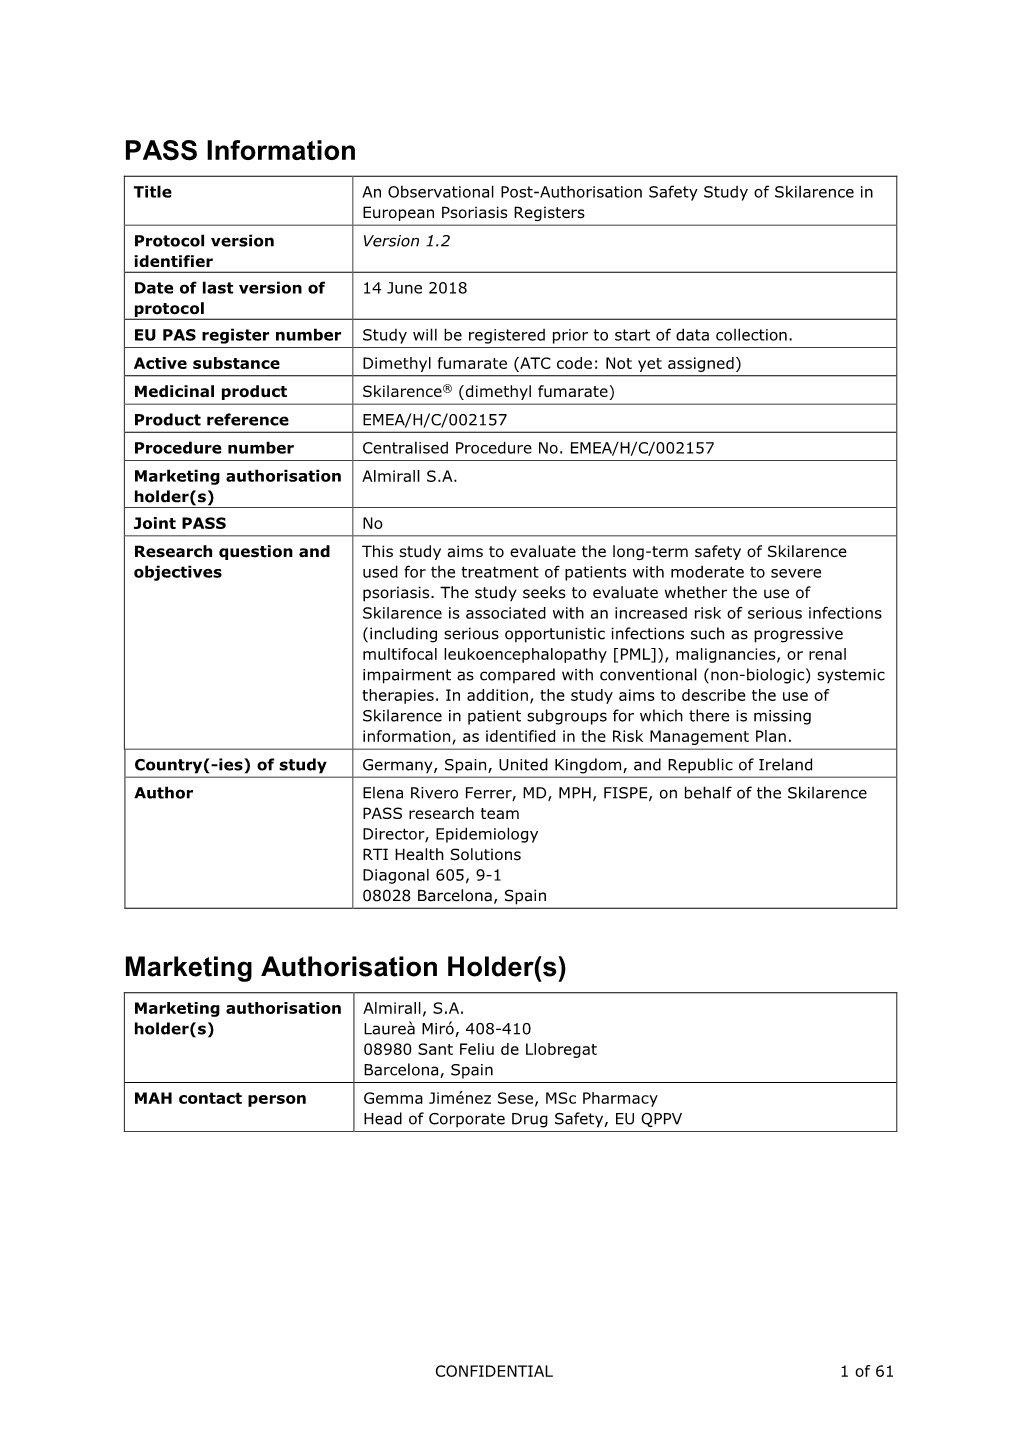 PASS Information Marketing Authorisation Holder(S)